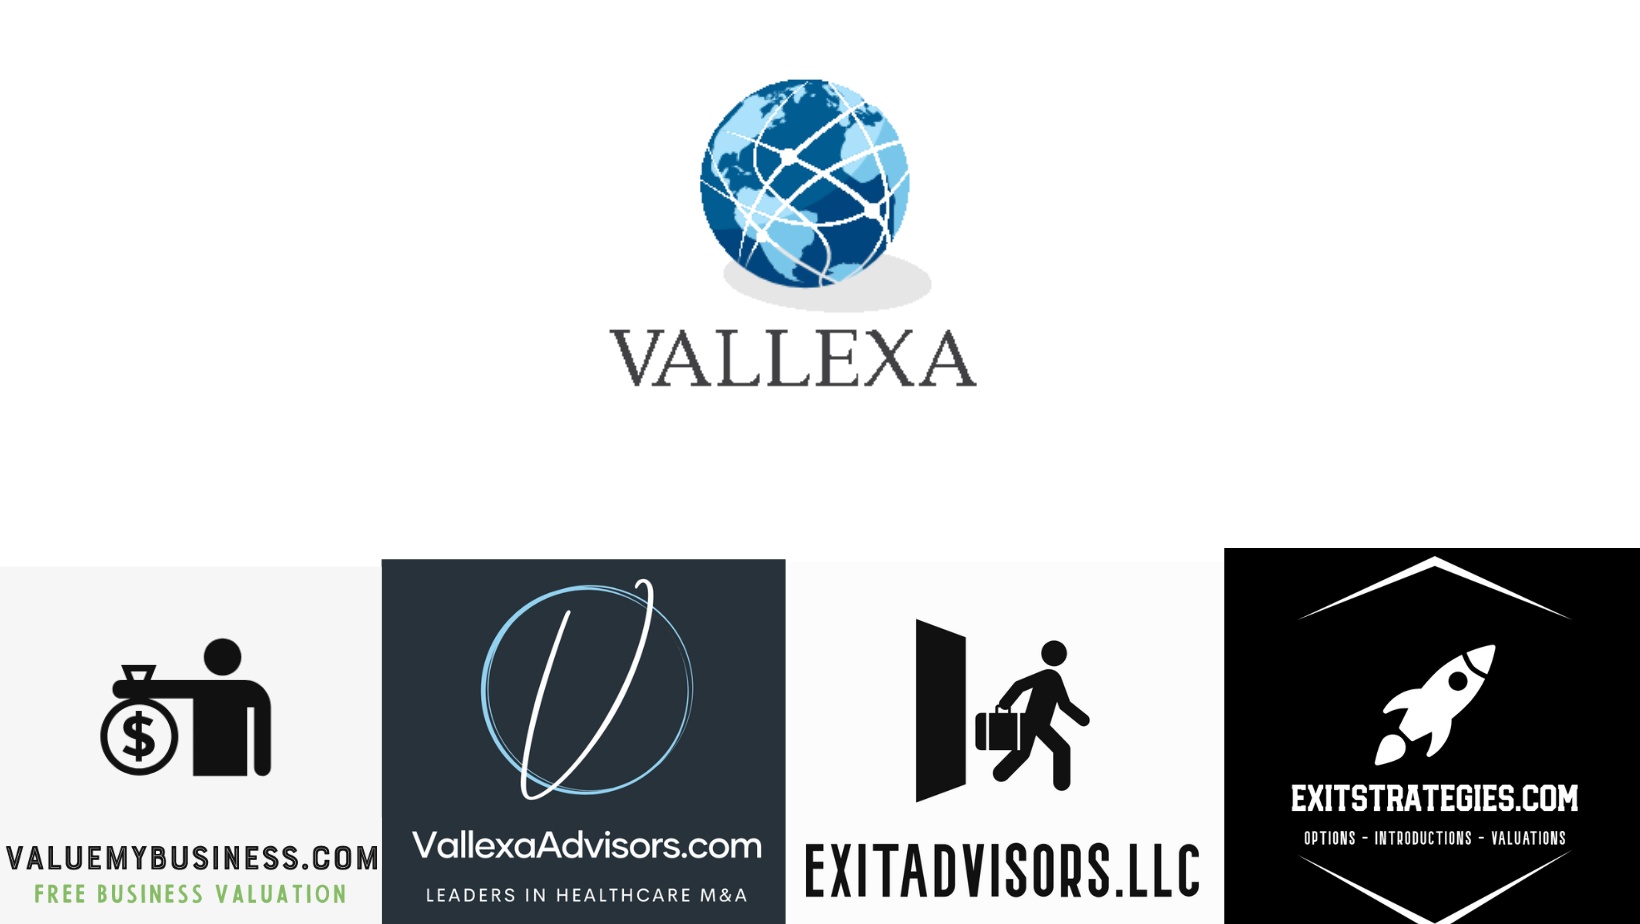 Vallexa Consulting